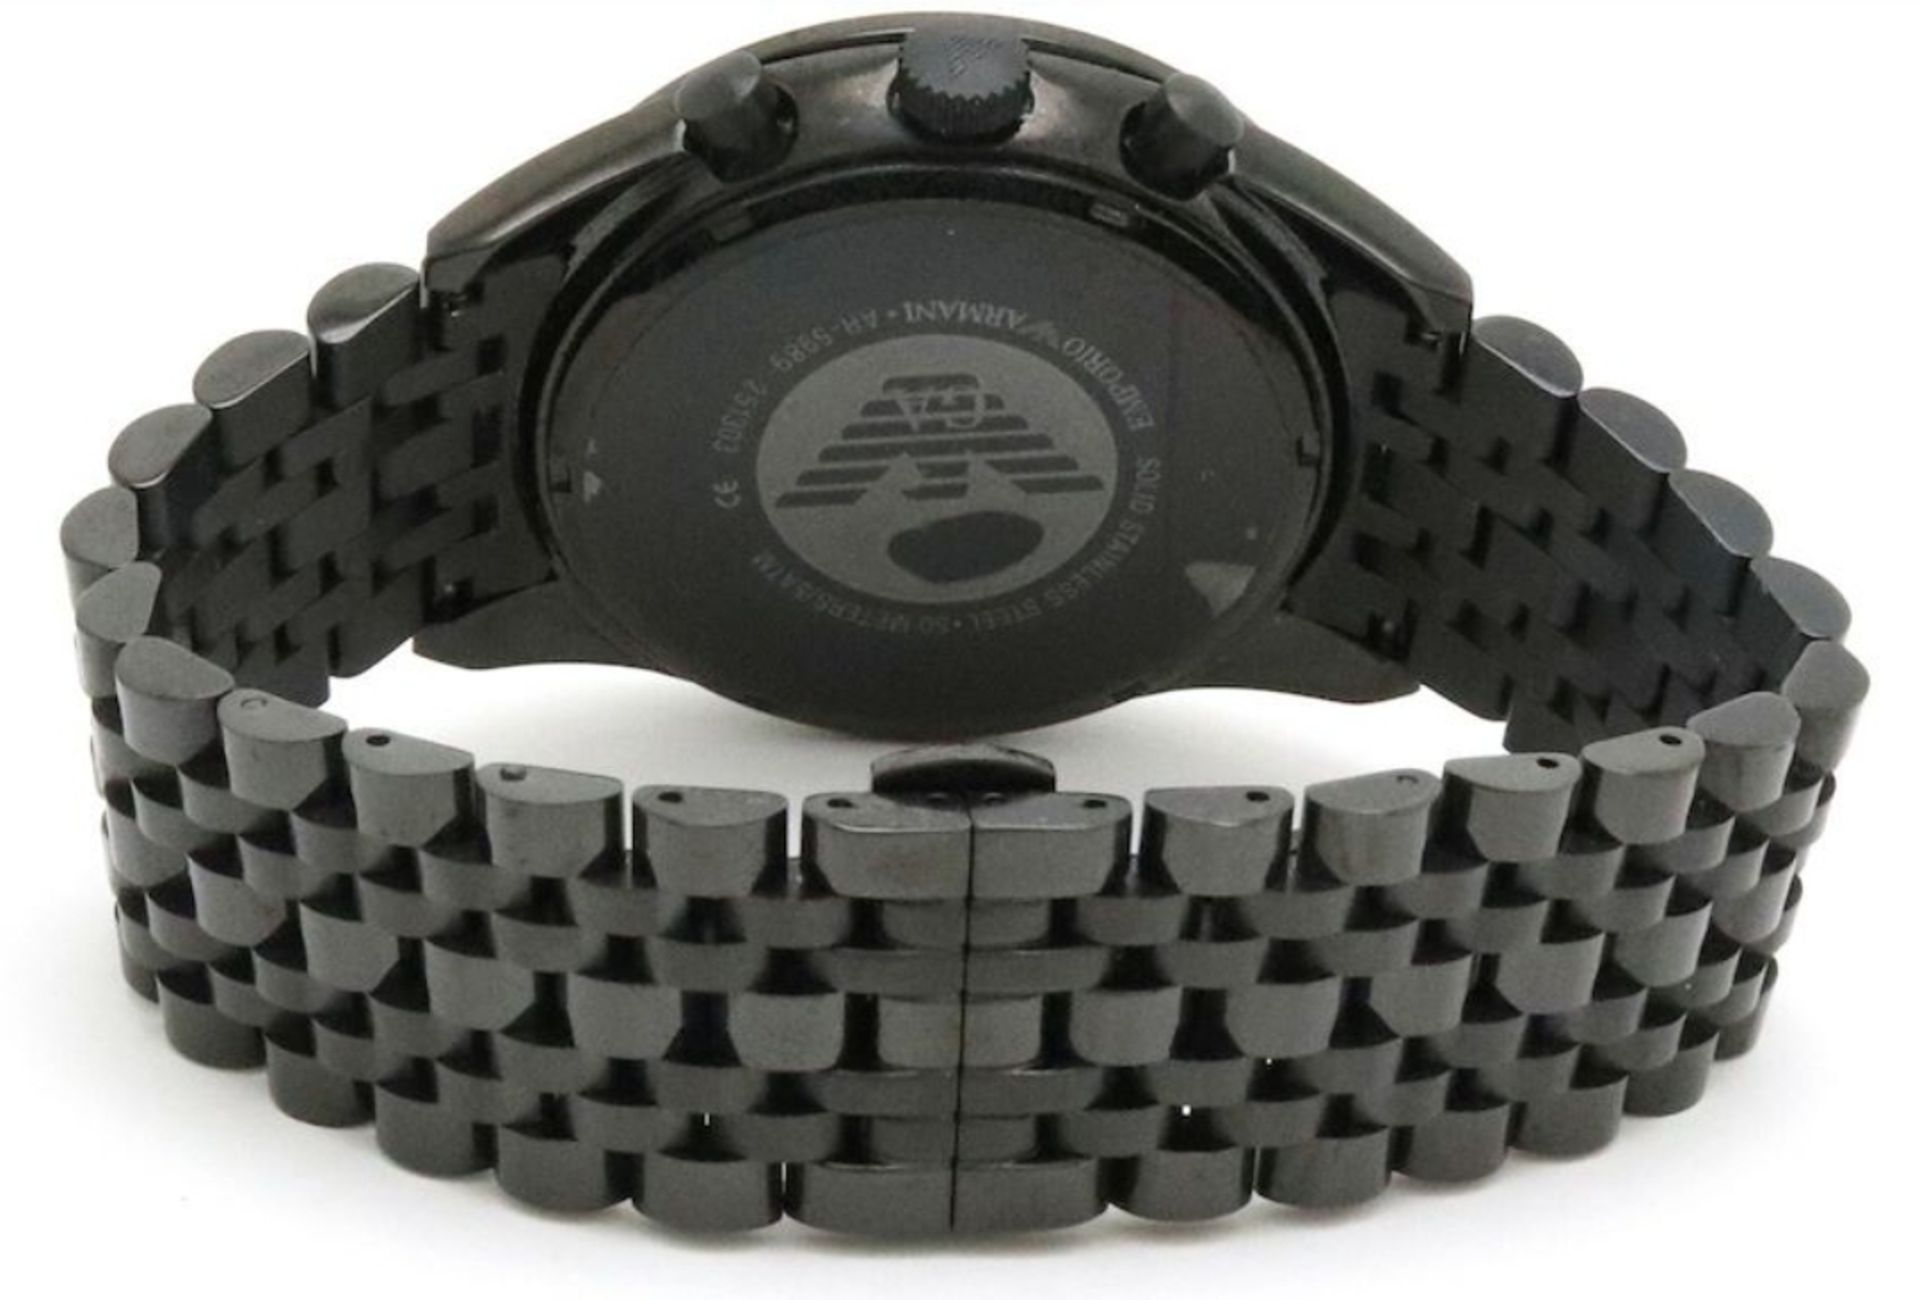 Emporio Armani AR5989 Men's Tazio Black Stainless Steel Bracelet Chronograph Watch - Image 2 of 5